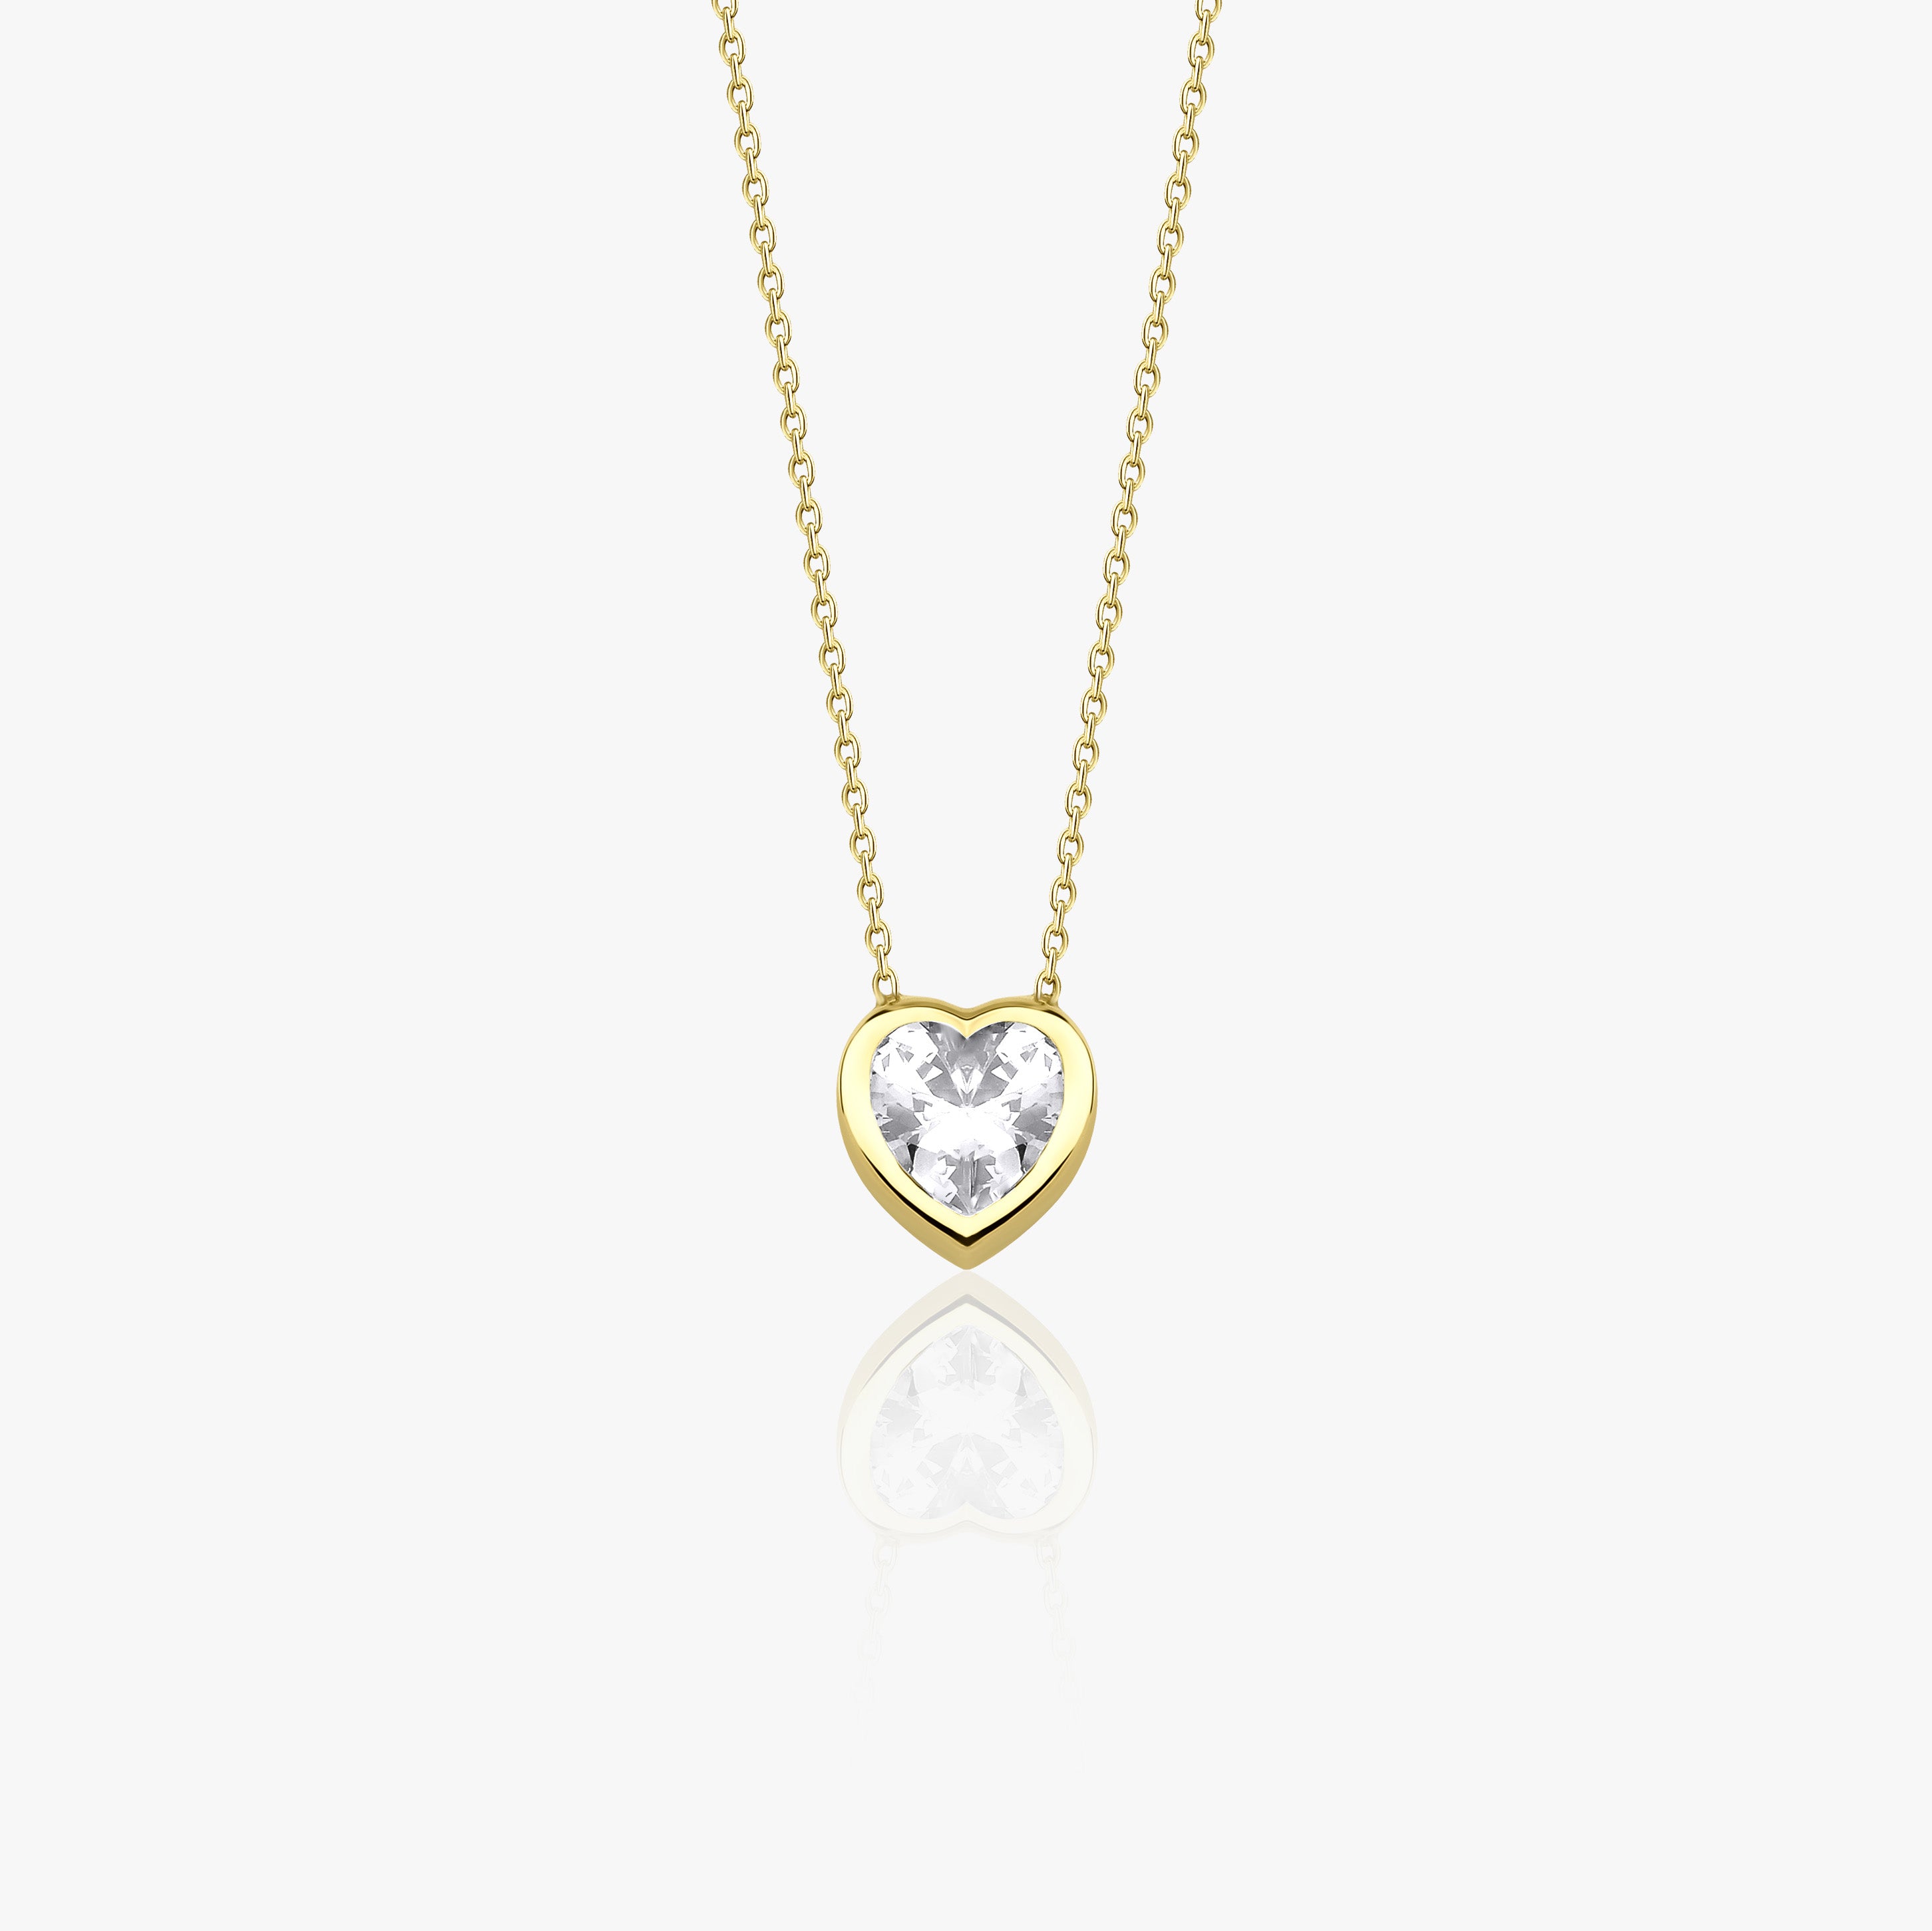 Heart Cut Gemstone Necklace in 14K Gold